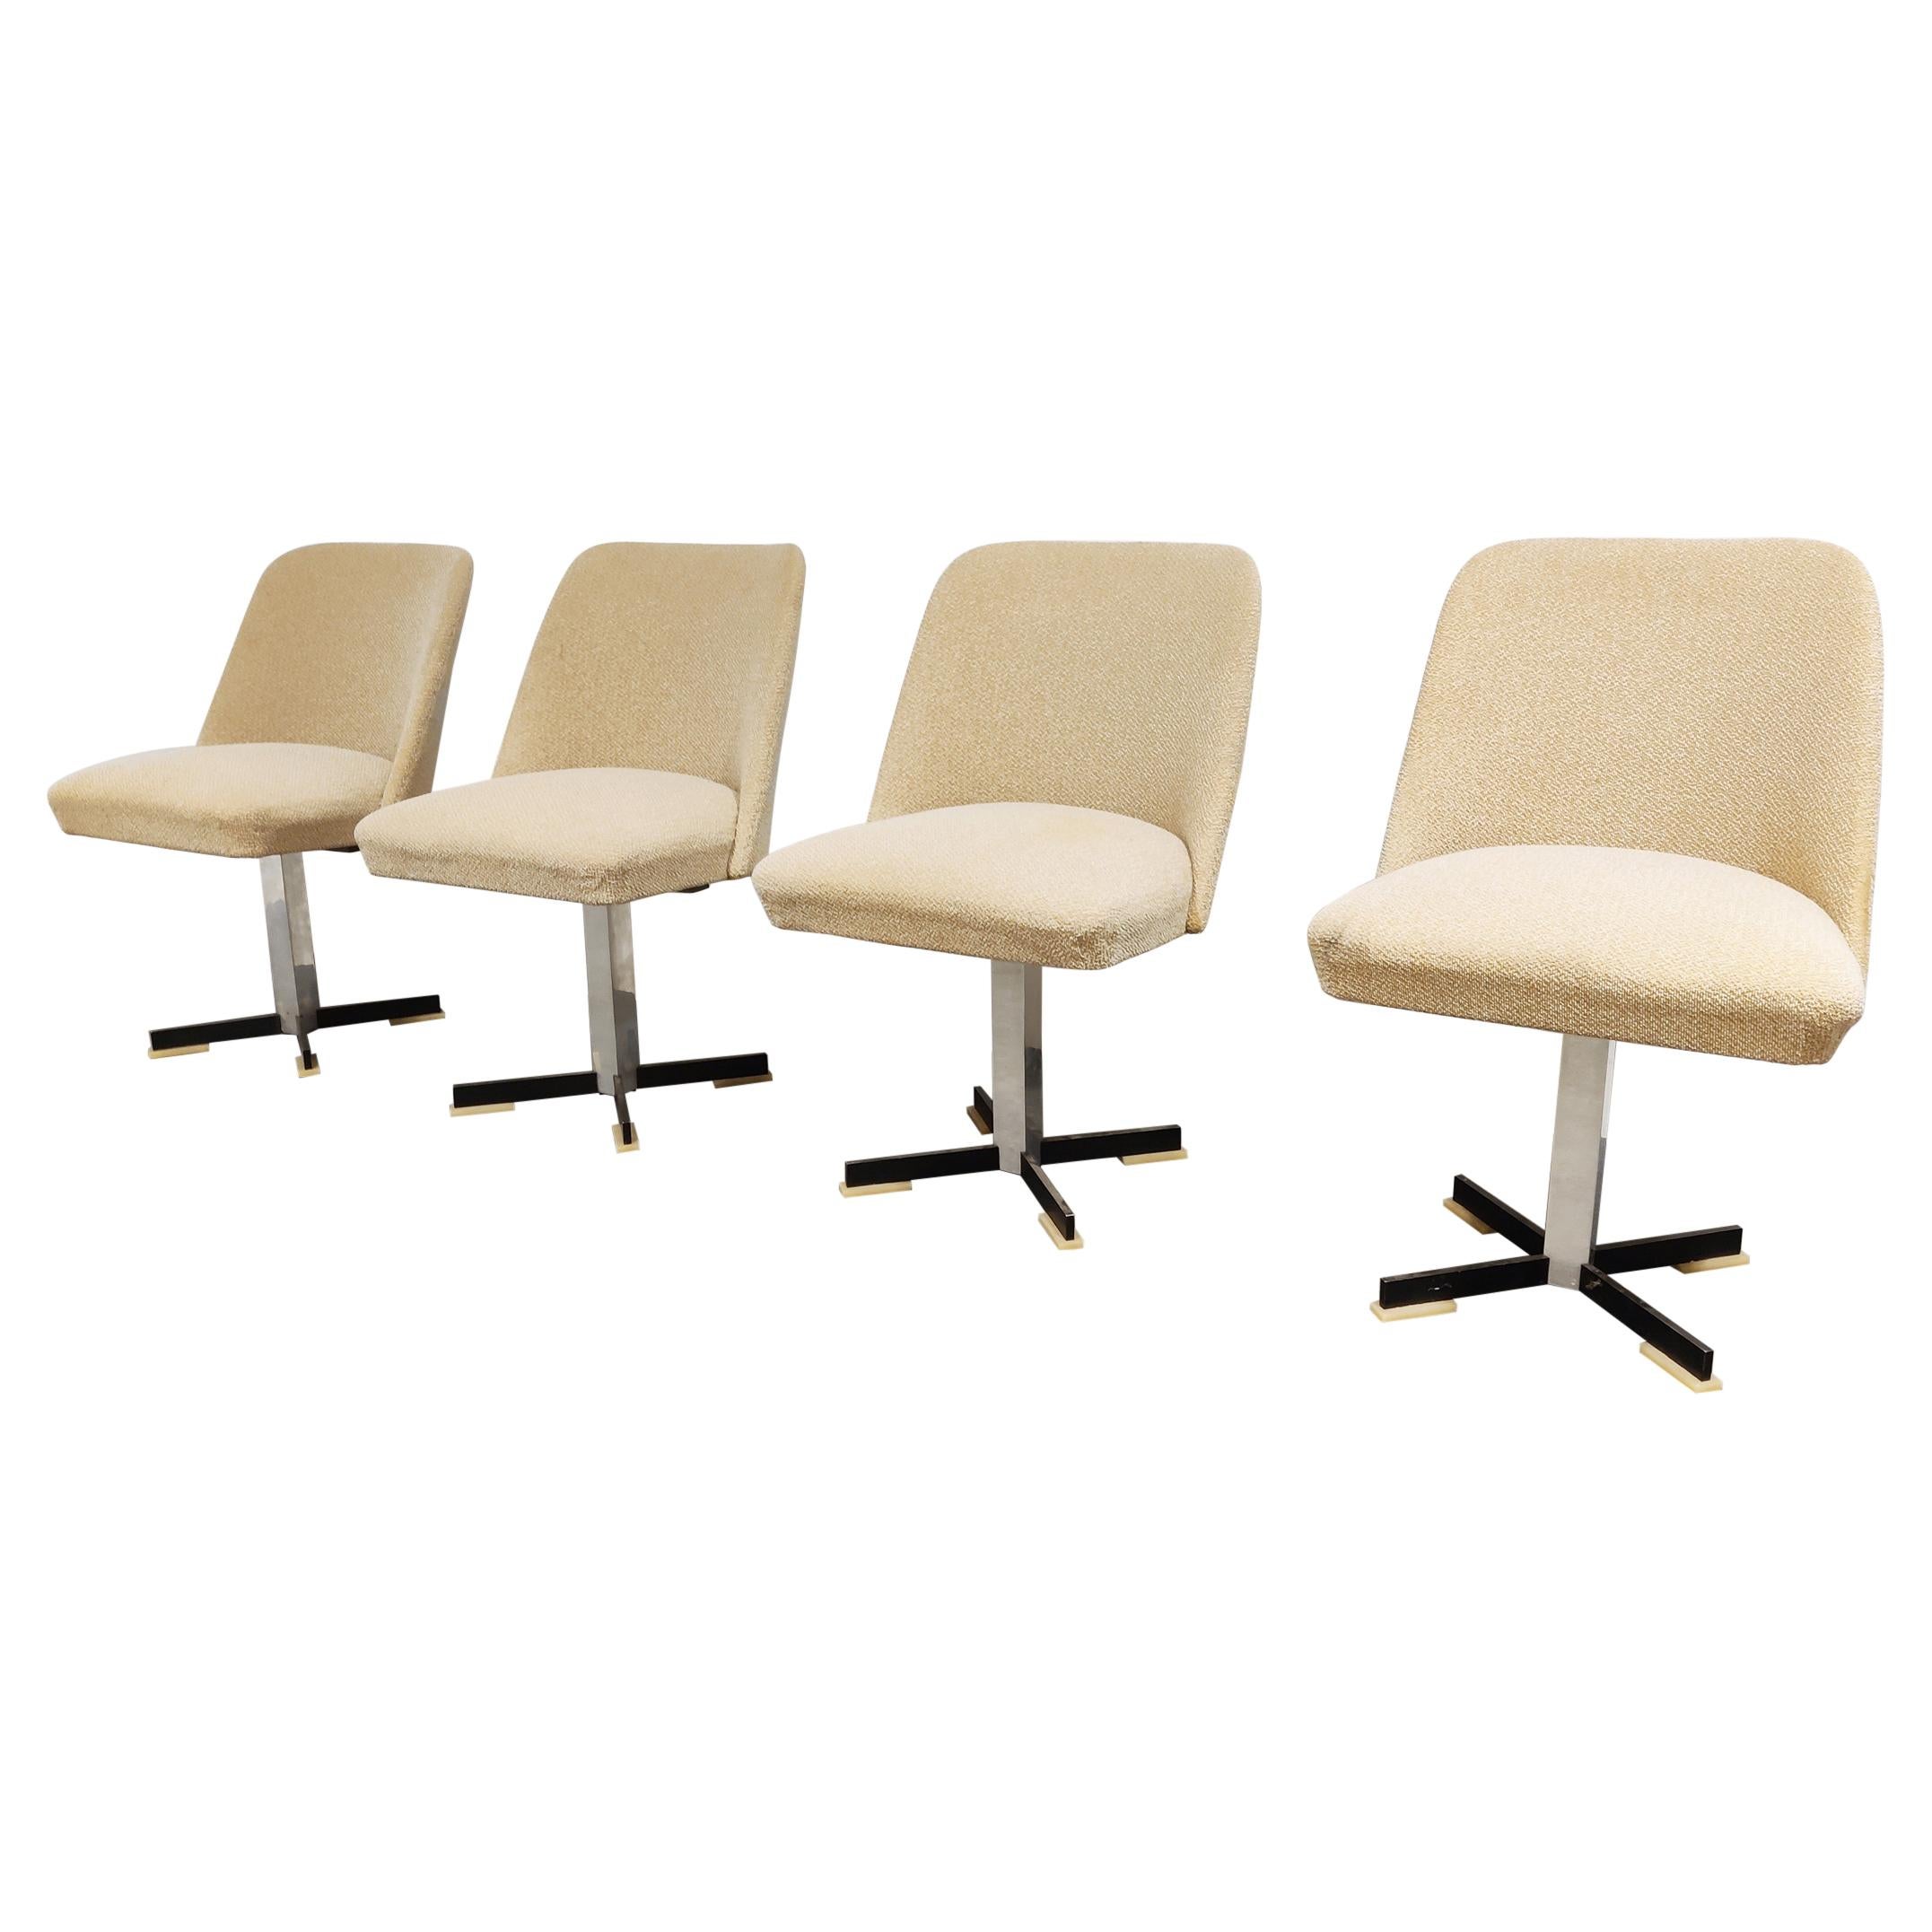 Set of 4 Mid Century Fabric Swicle Chairs, 1960s